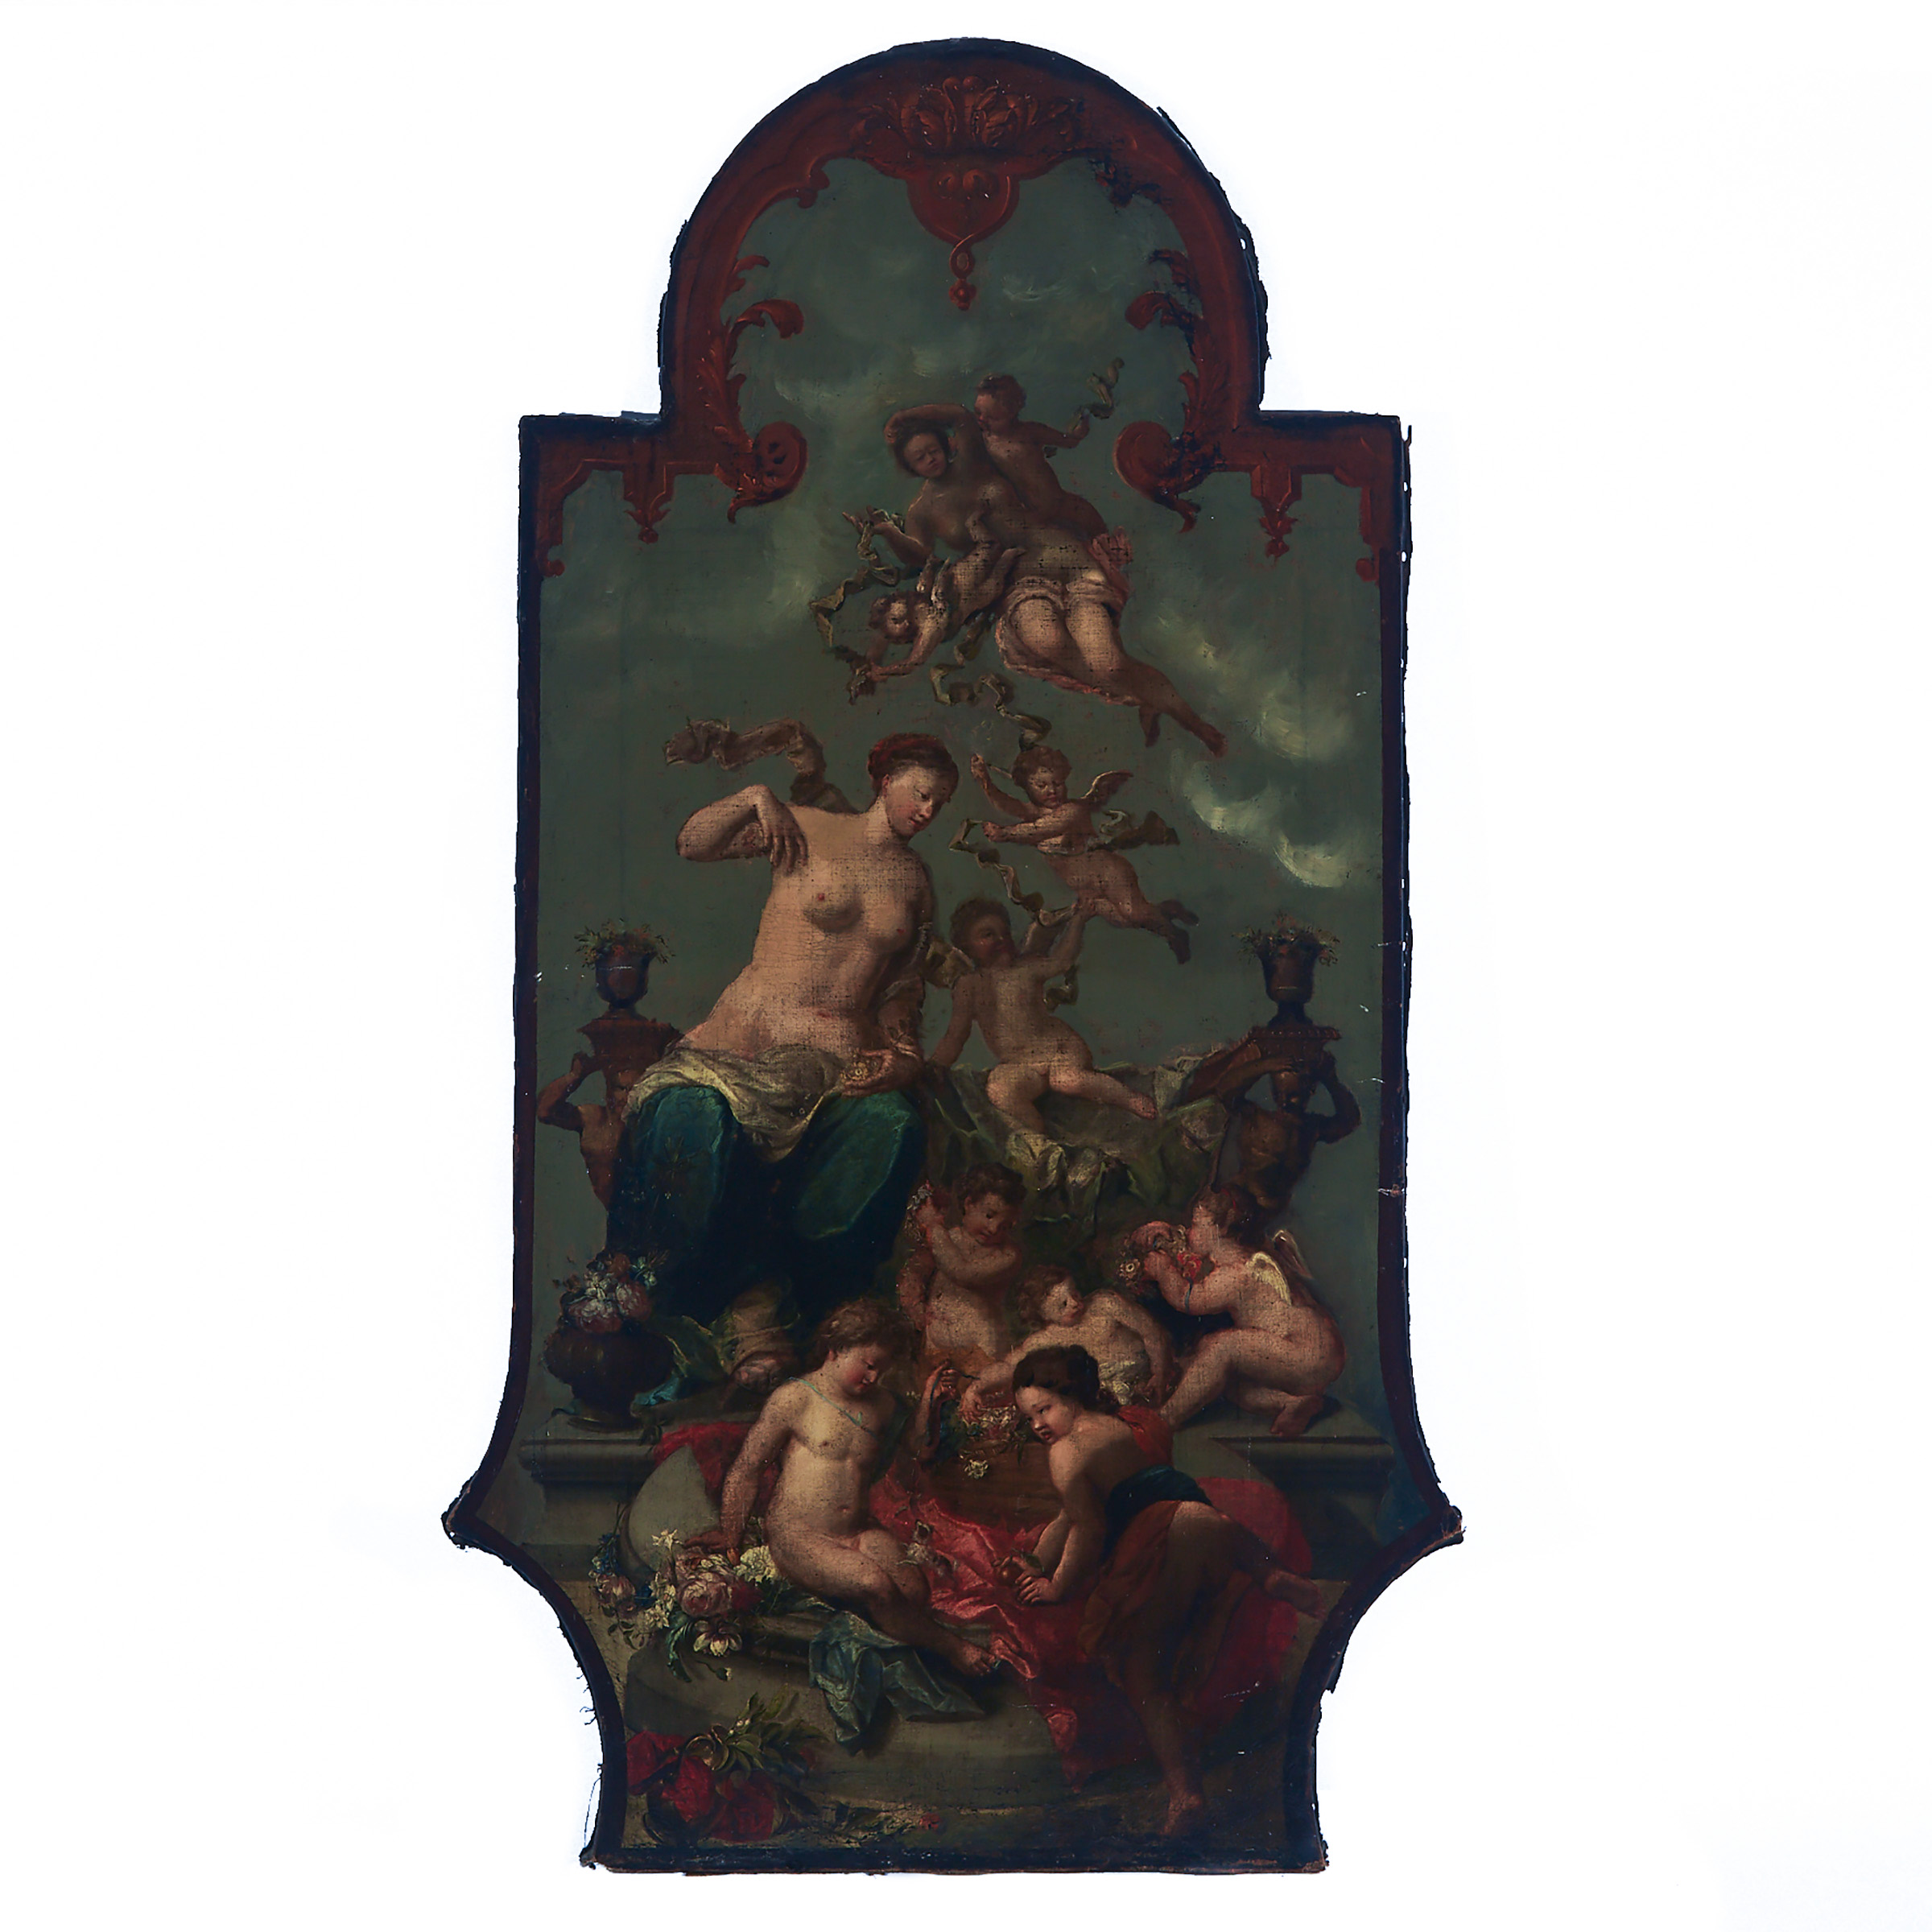 Follower of Giovanni Battista Tiepolo (1696 - 1770)